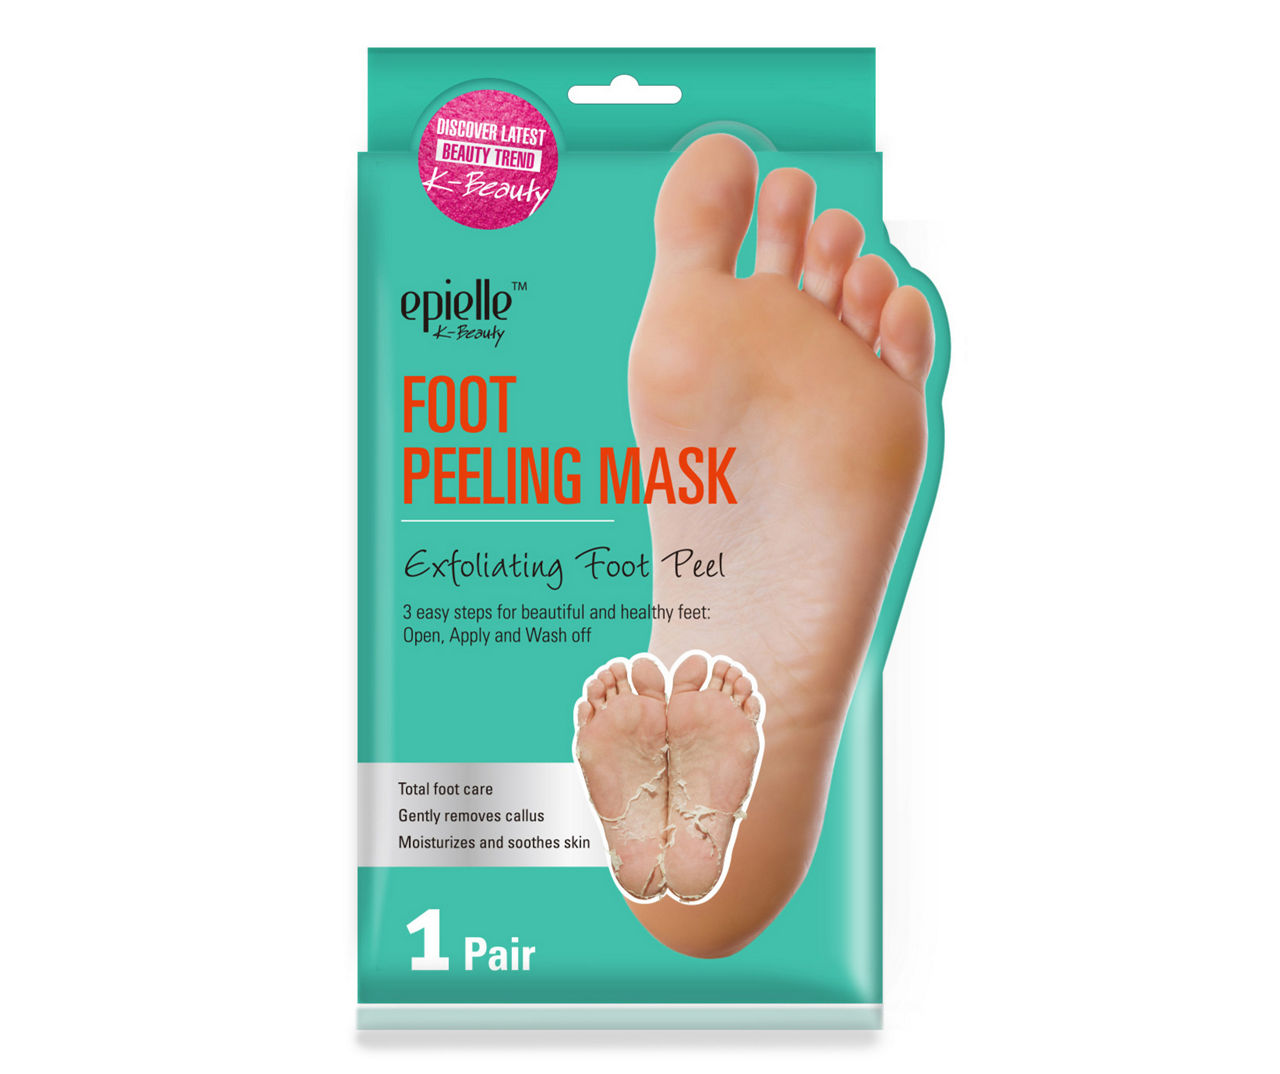 4PKS] Silky Smooth Foot Peeling Mask